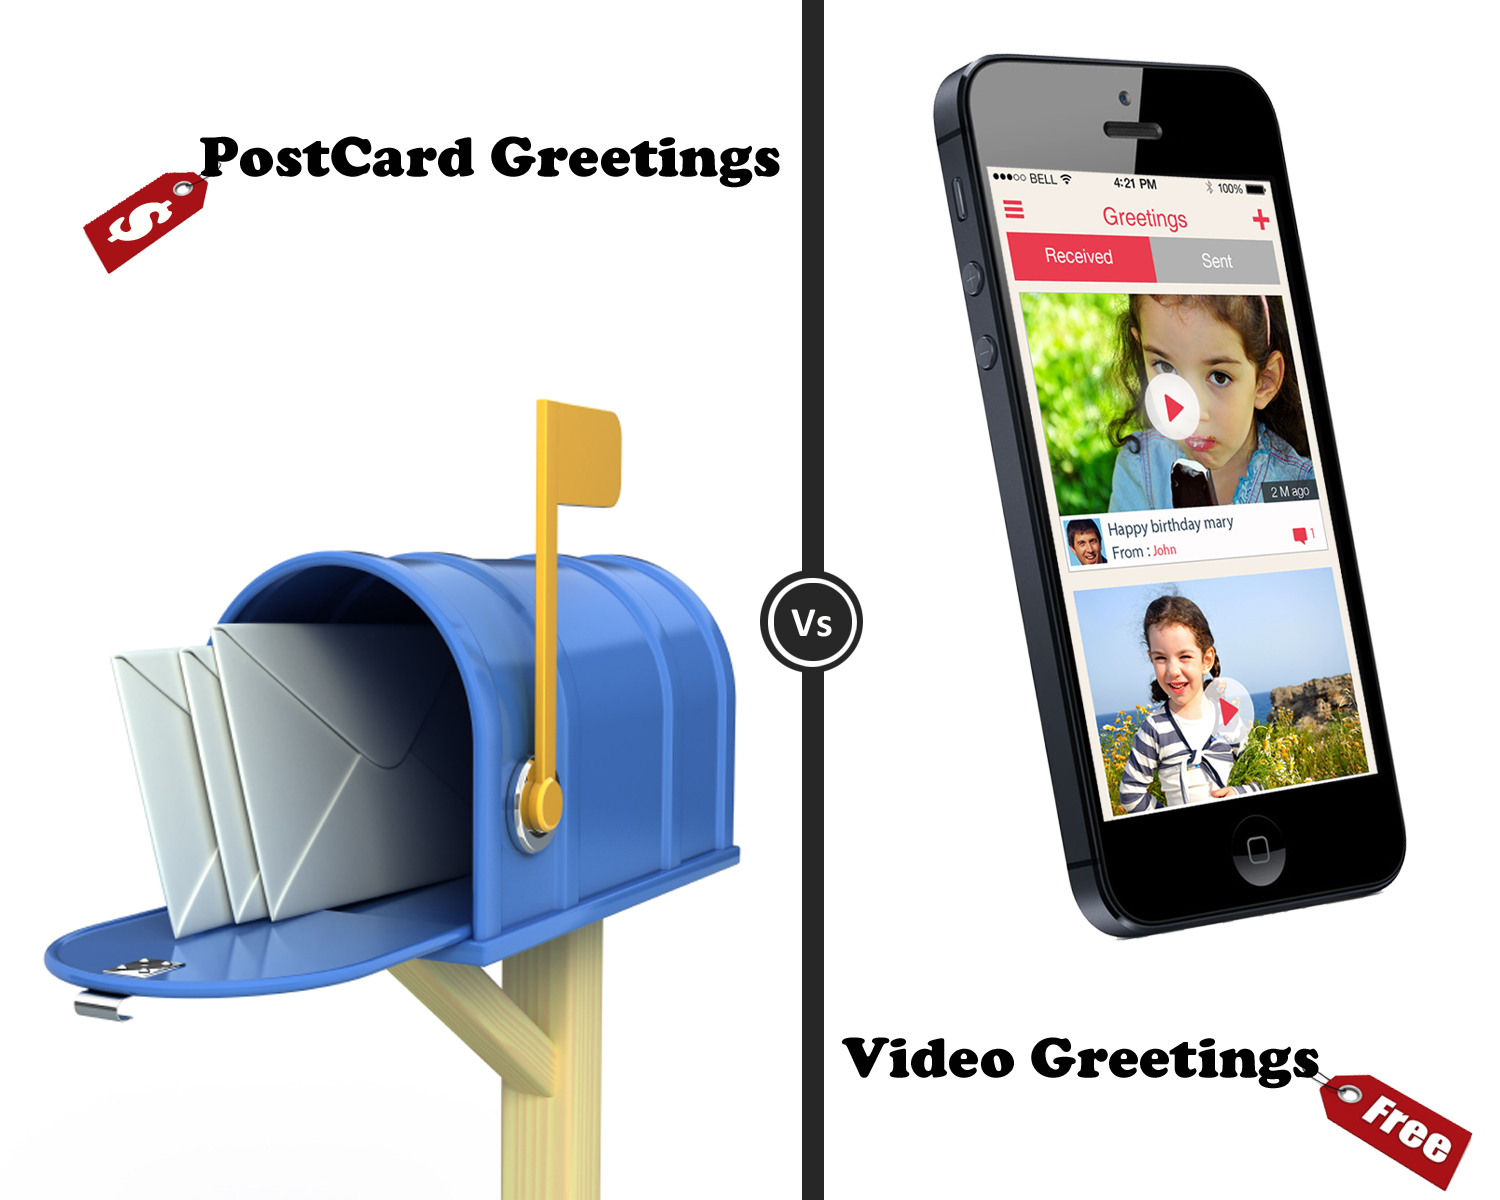 postcard-greetings-vs-video-greetings